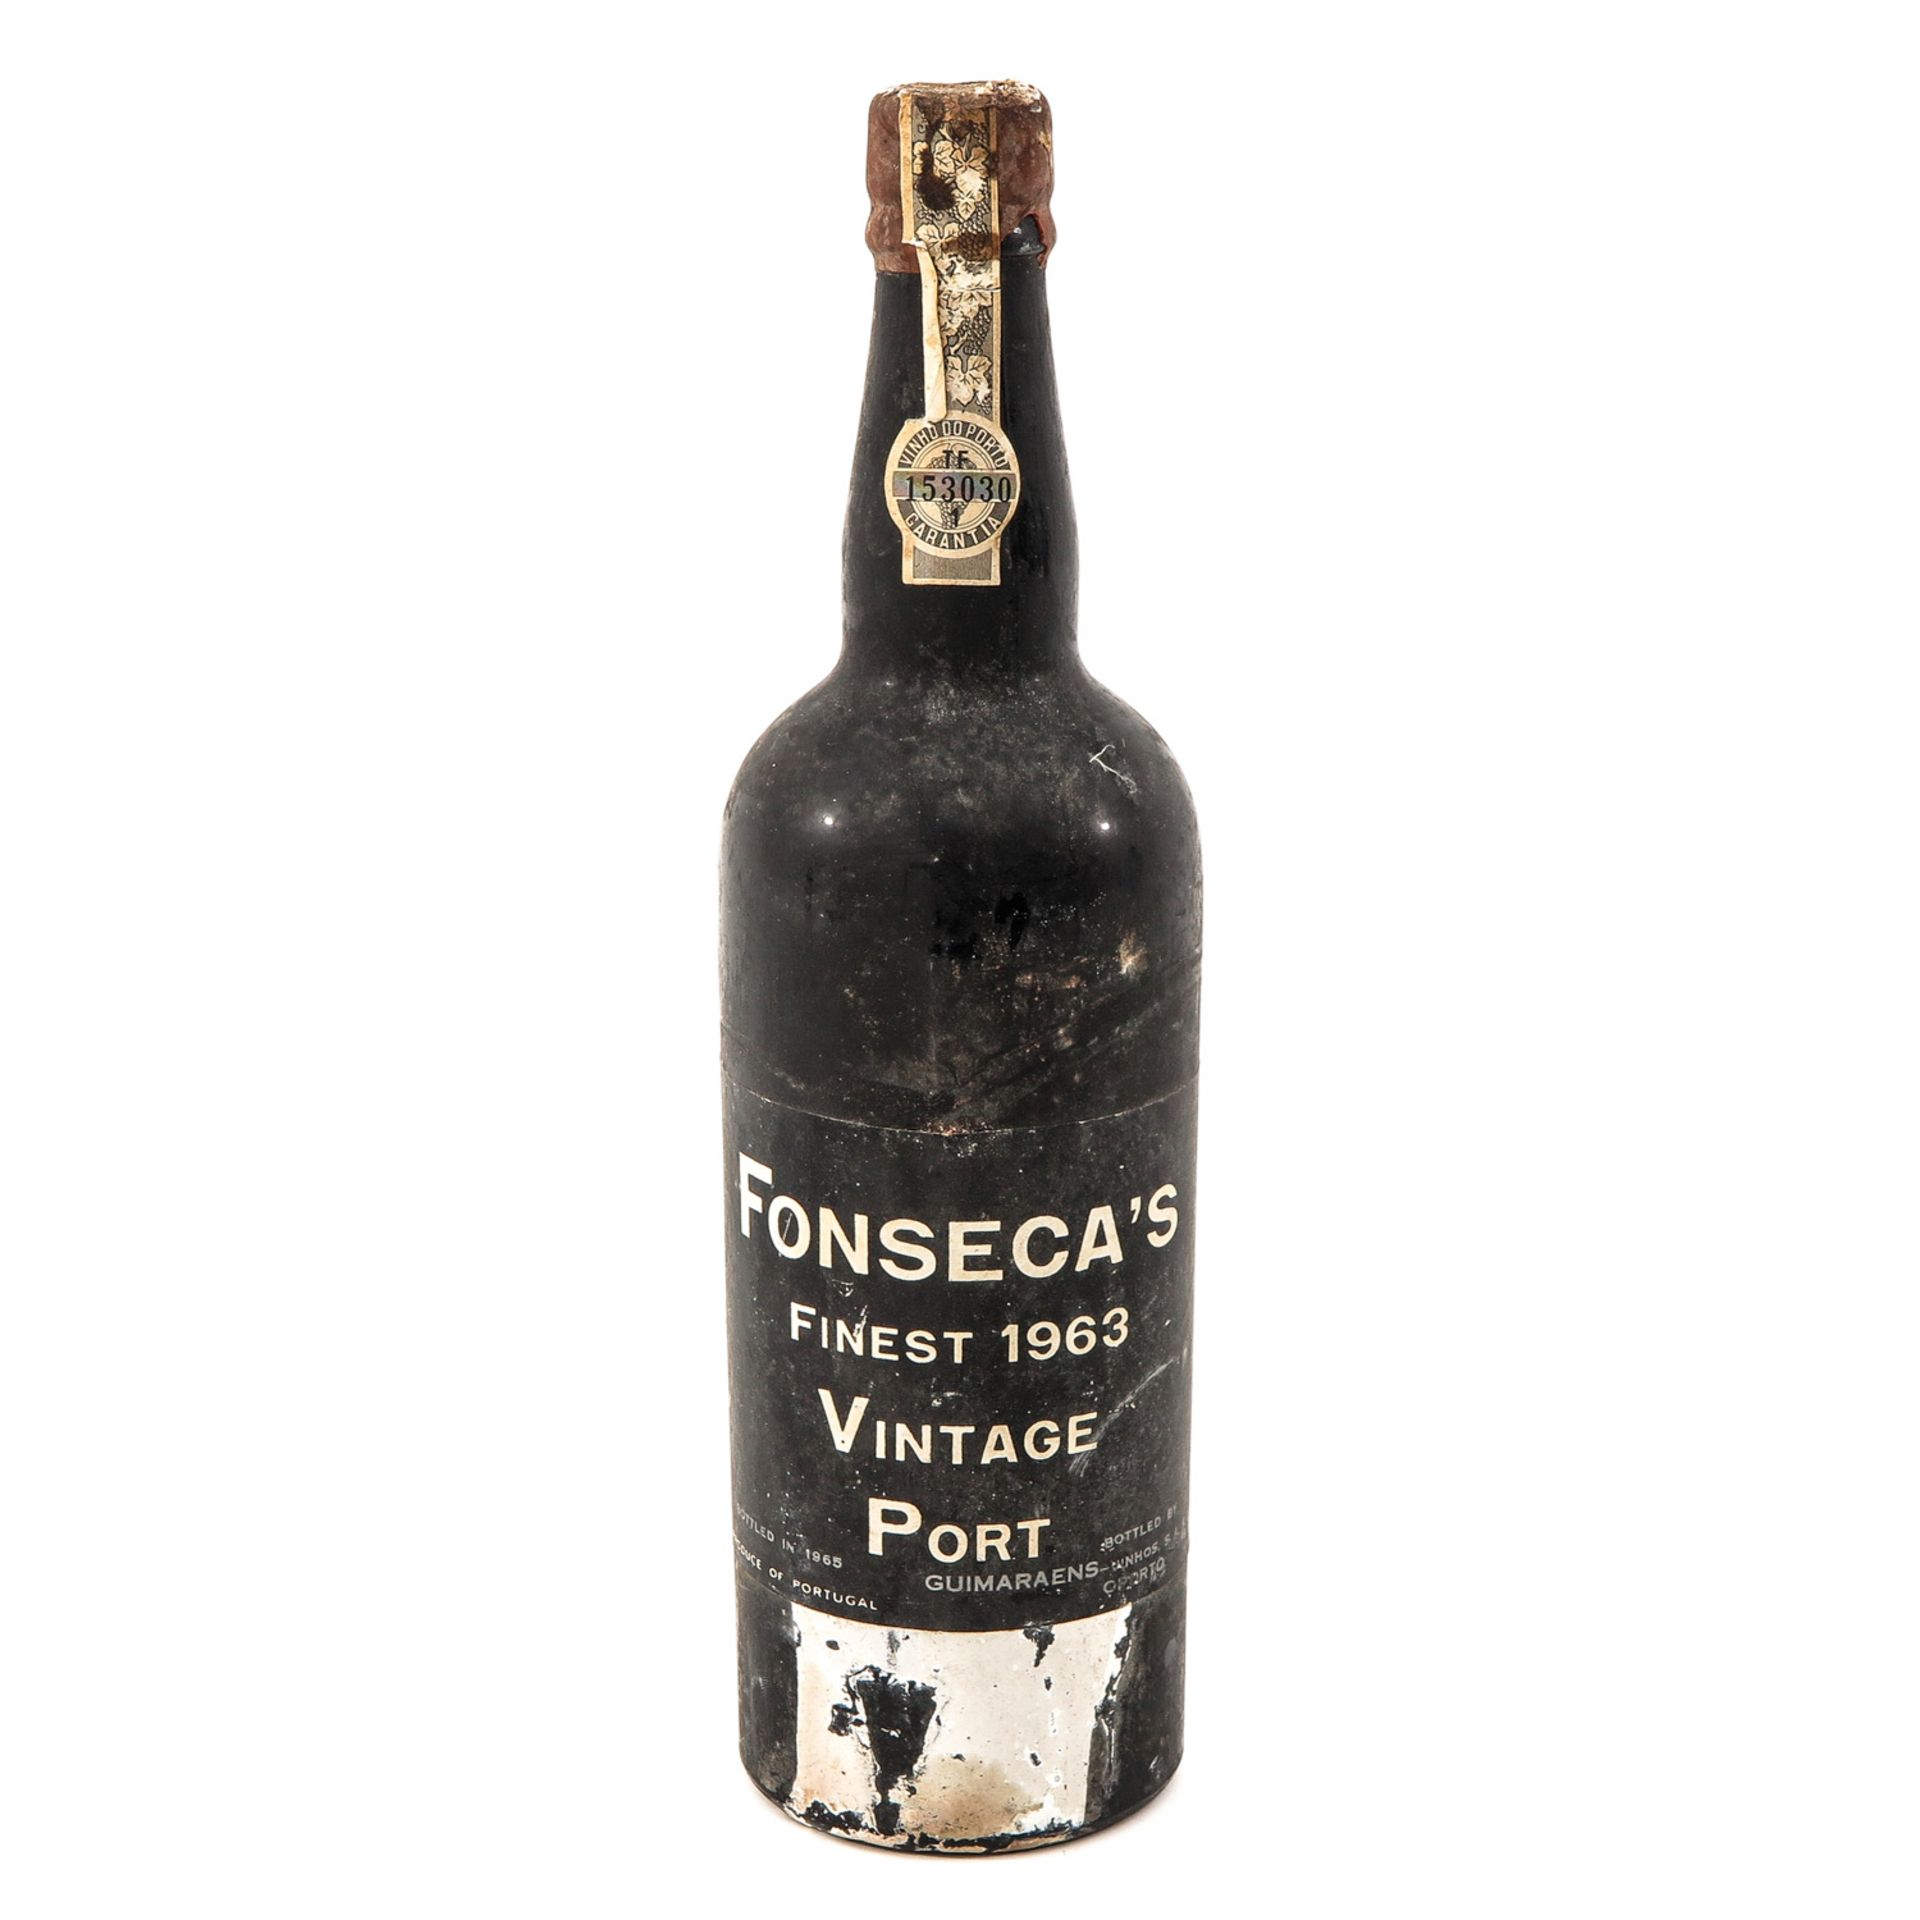 A Bottle of Fonseca Port 1963